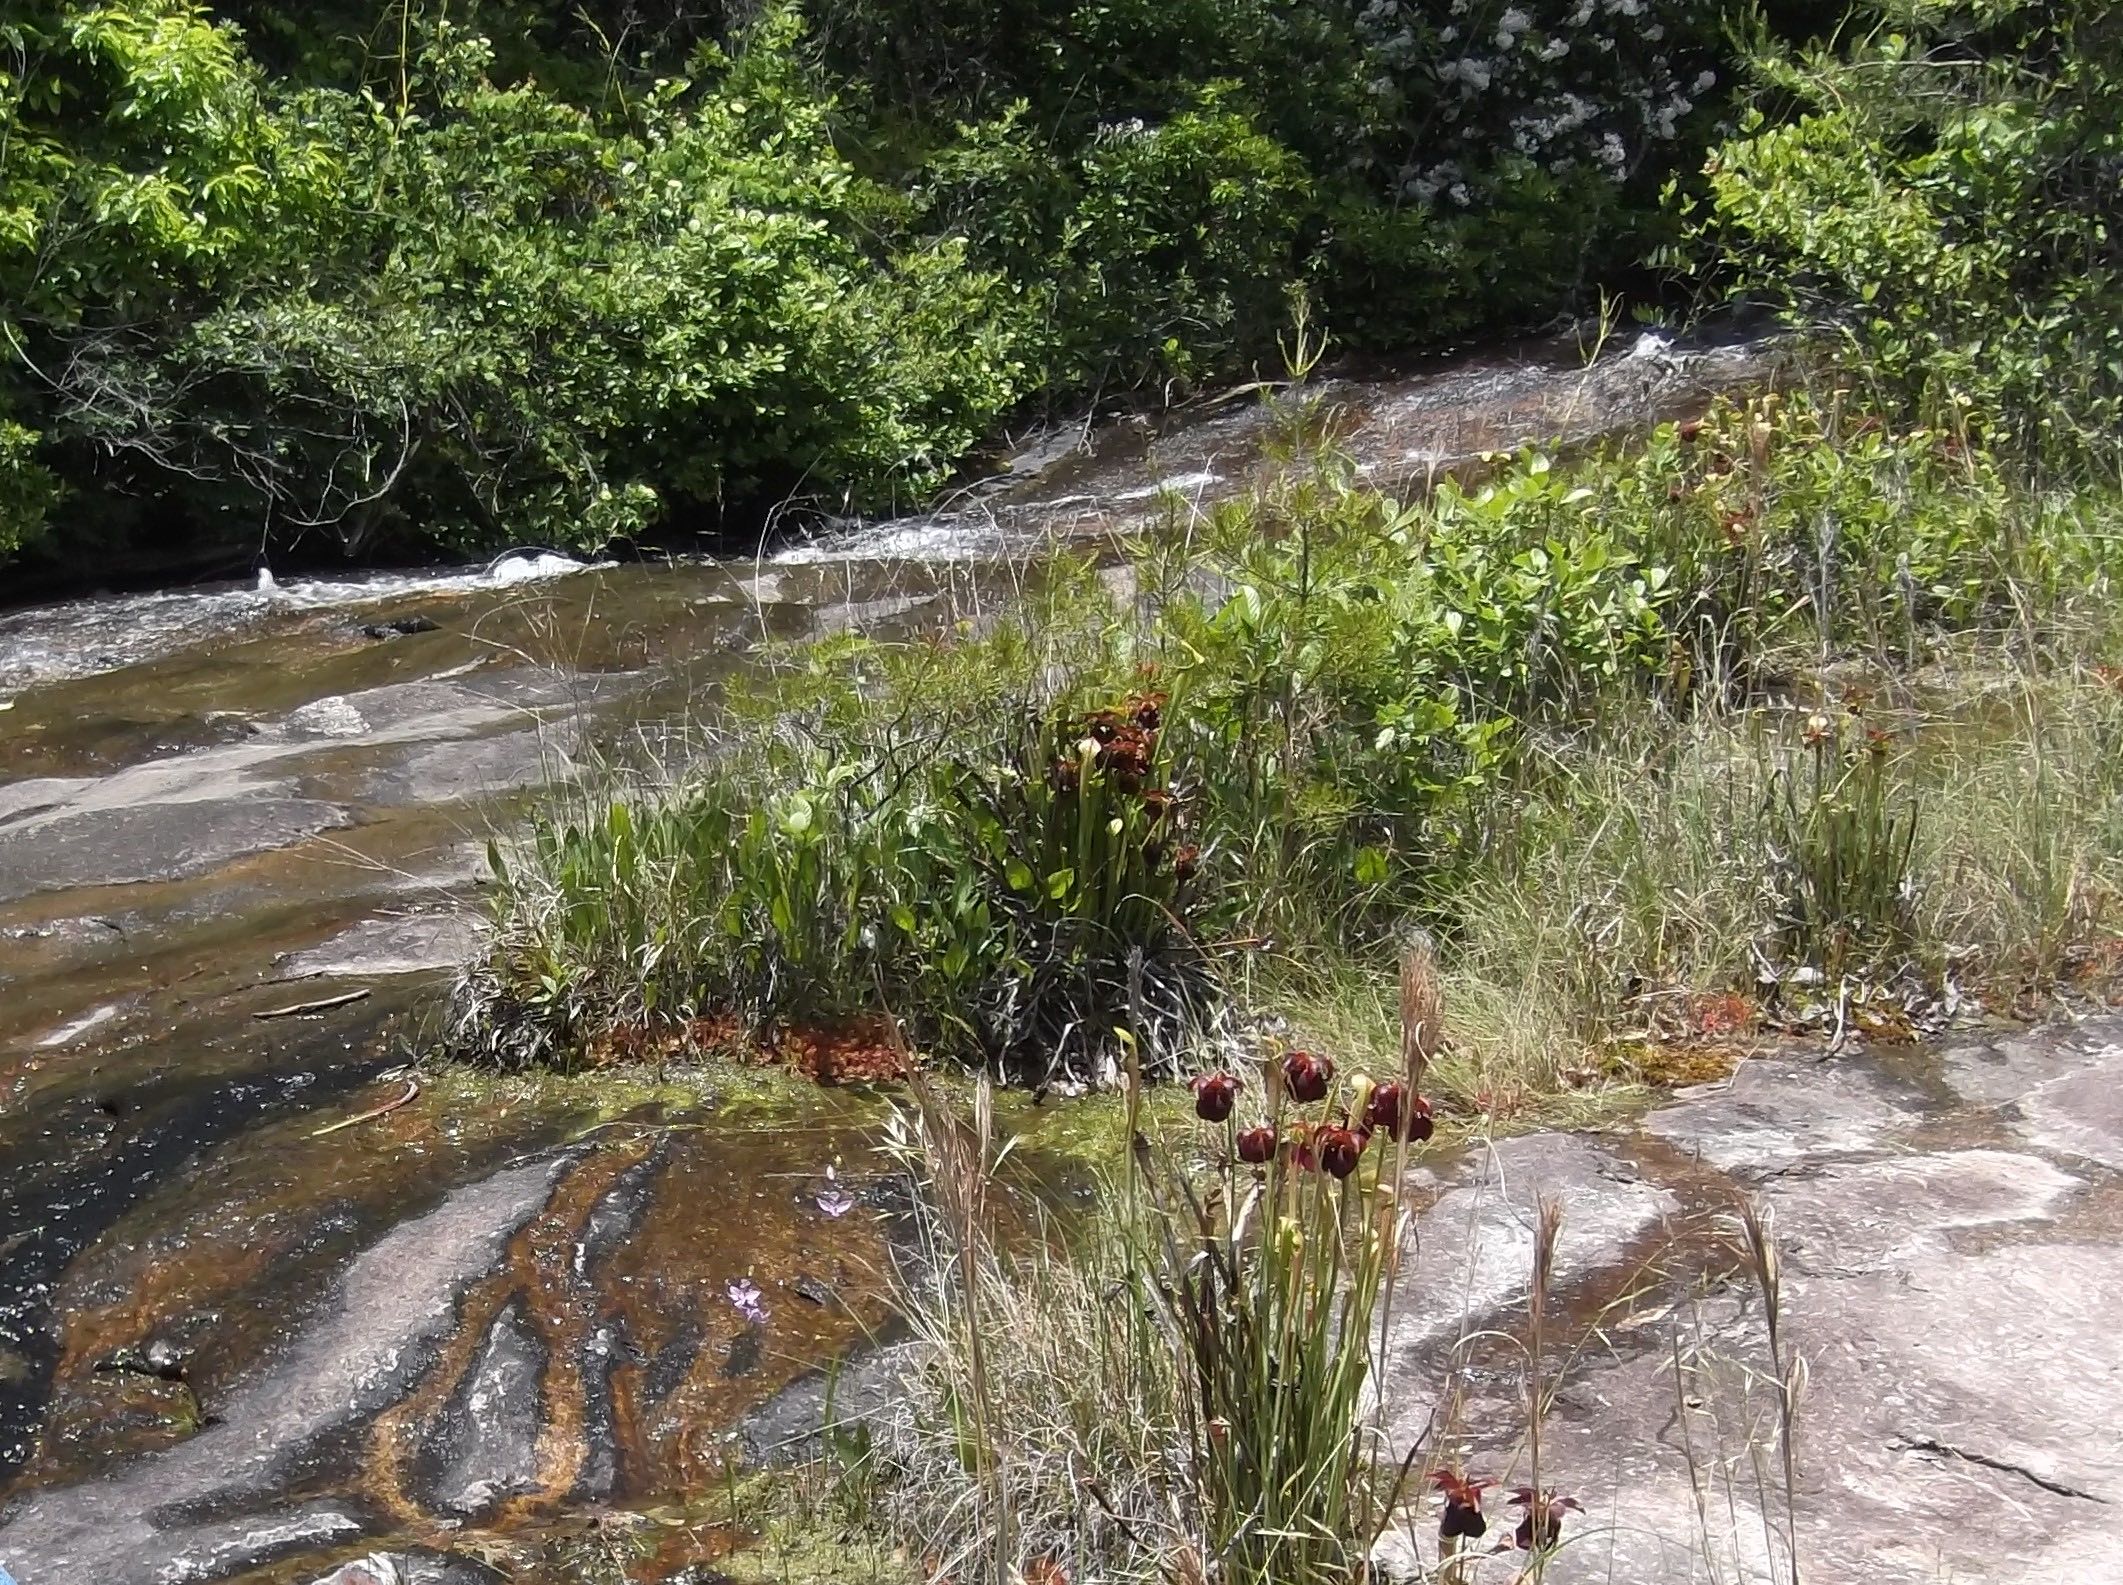 The Scientific Name is Sarracenia jonesii. You will likely hear them called Mountain Sweet Pitcherplant. This picture shows the Cataract bog habitat on Blue Ridge Escarpment south of Brevard, NC of Sarracenia jonesii